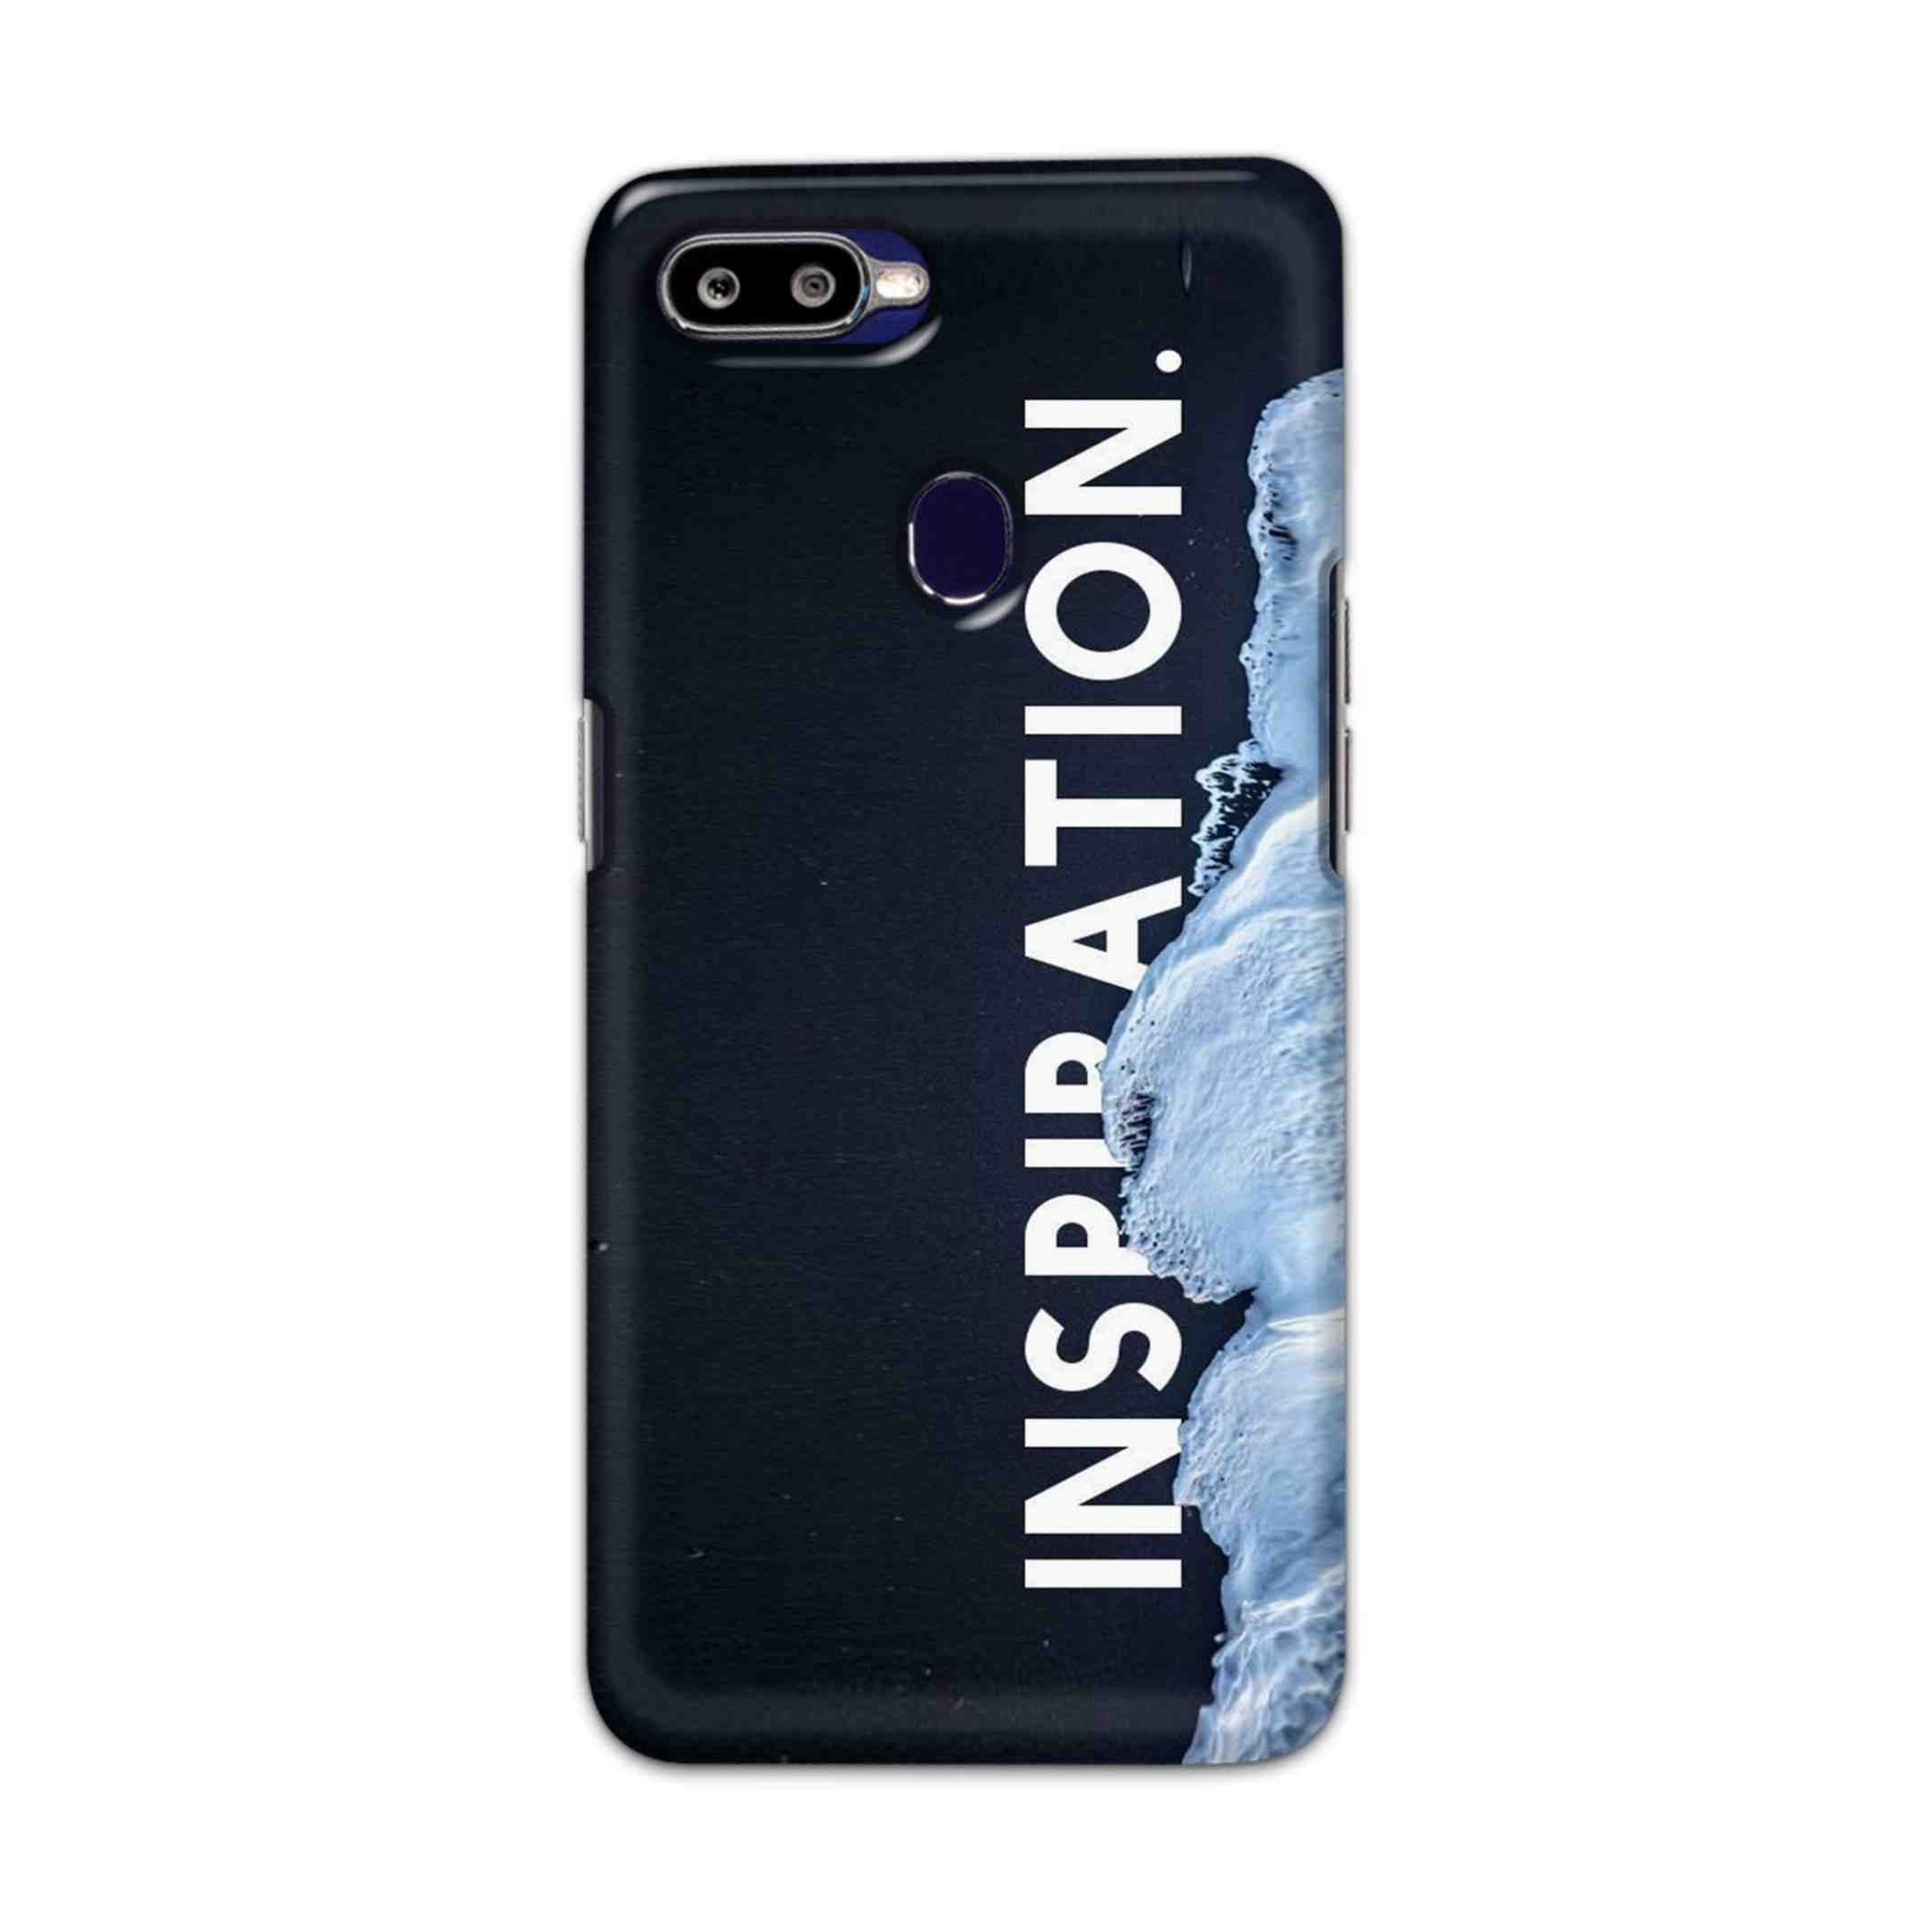 Buy Inspiration Hard Back Mobile Phone Case/Cover For Oppo F9 / F9 Pro Online